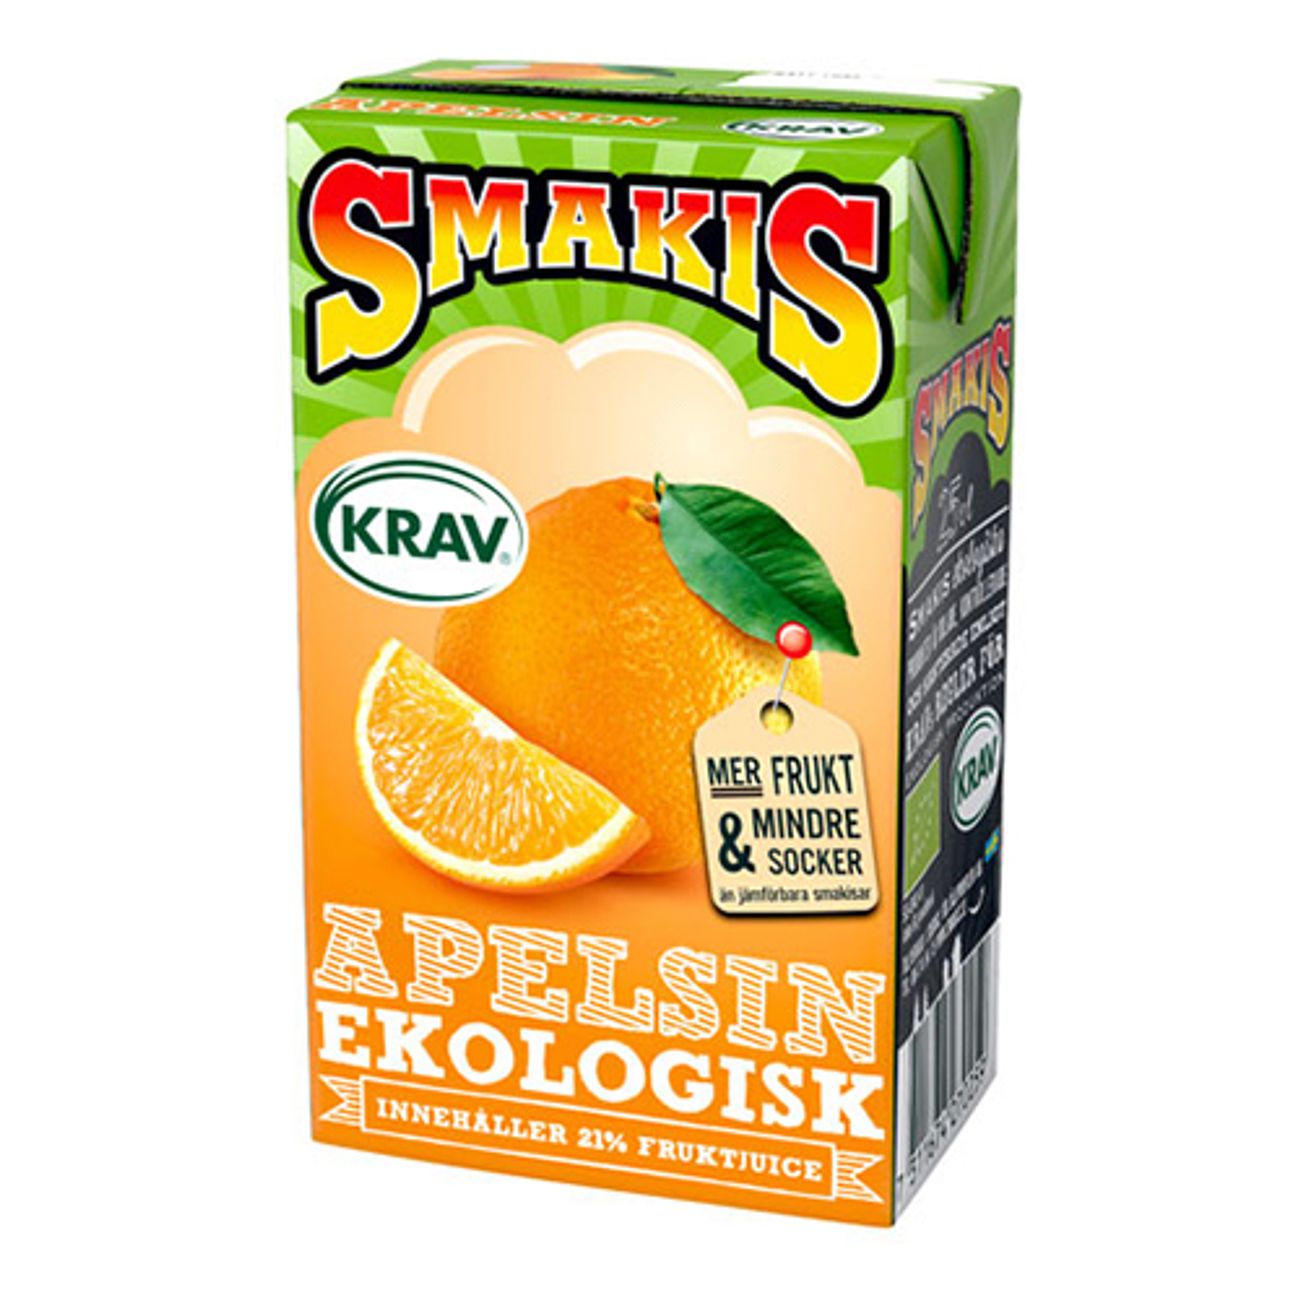 smakis-apelsin-ekologisk-73949-1